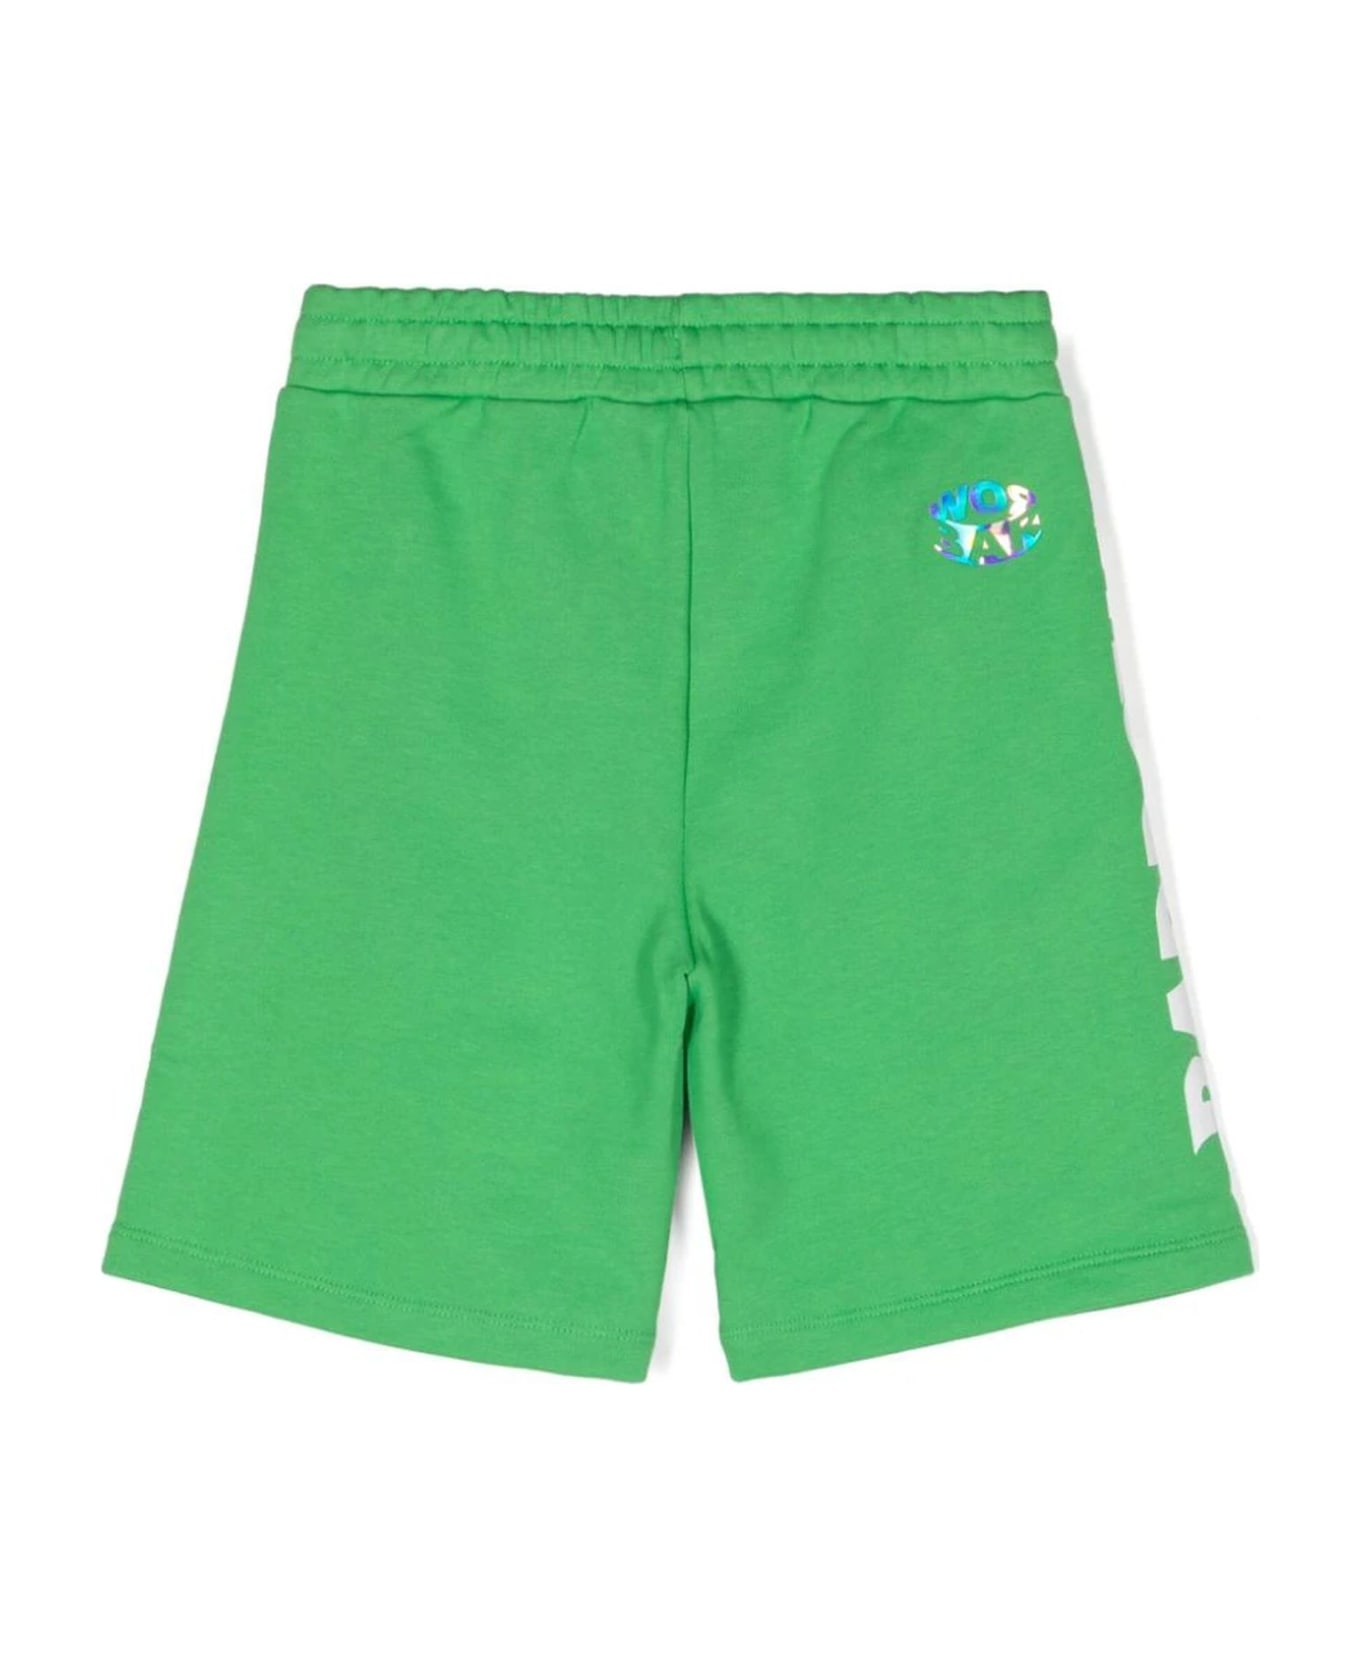 Barrow 's Shorts Green - Green